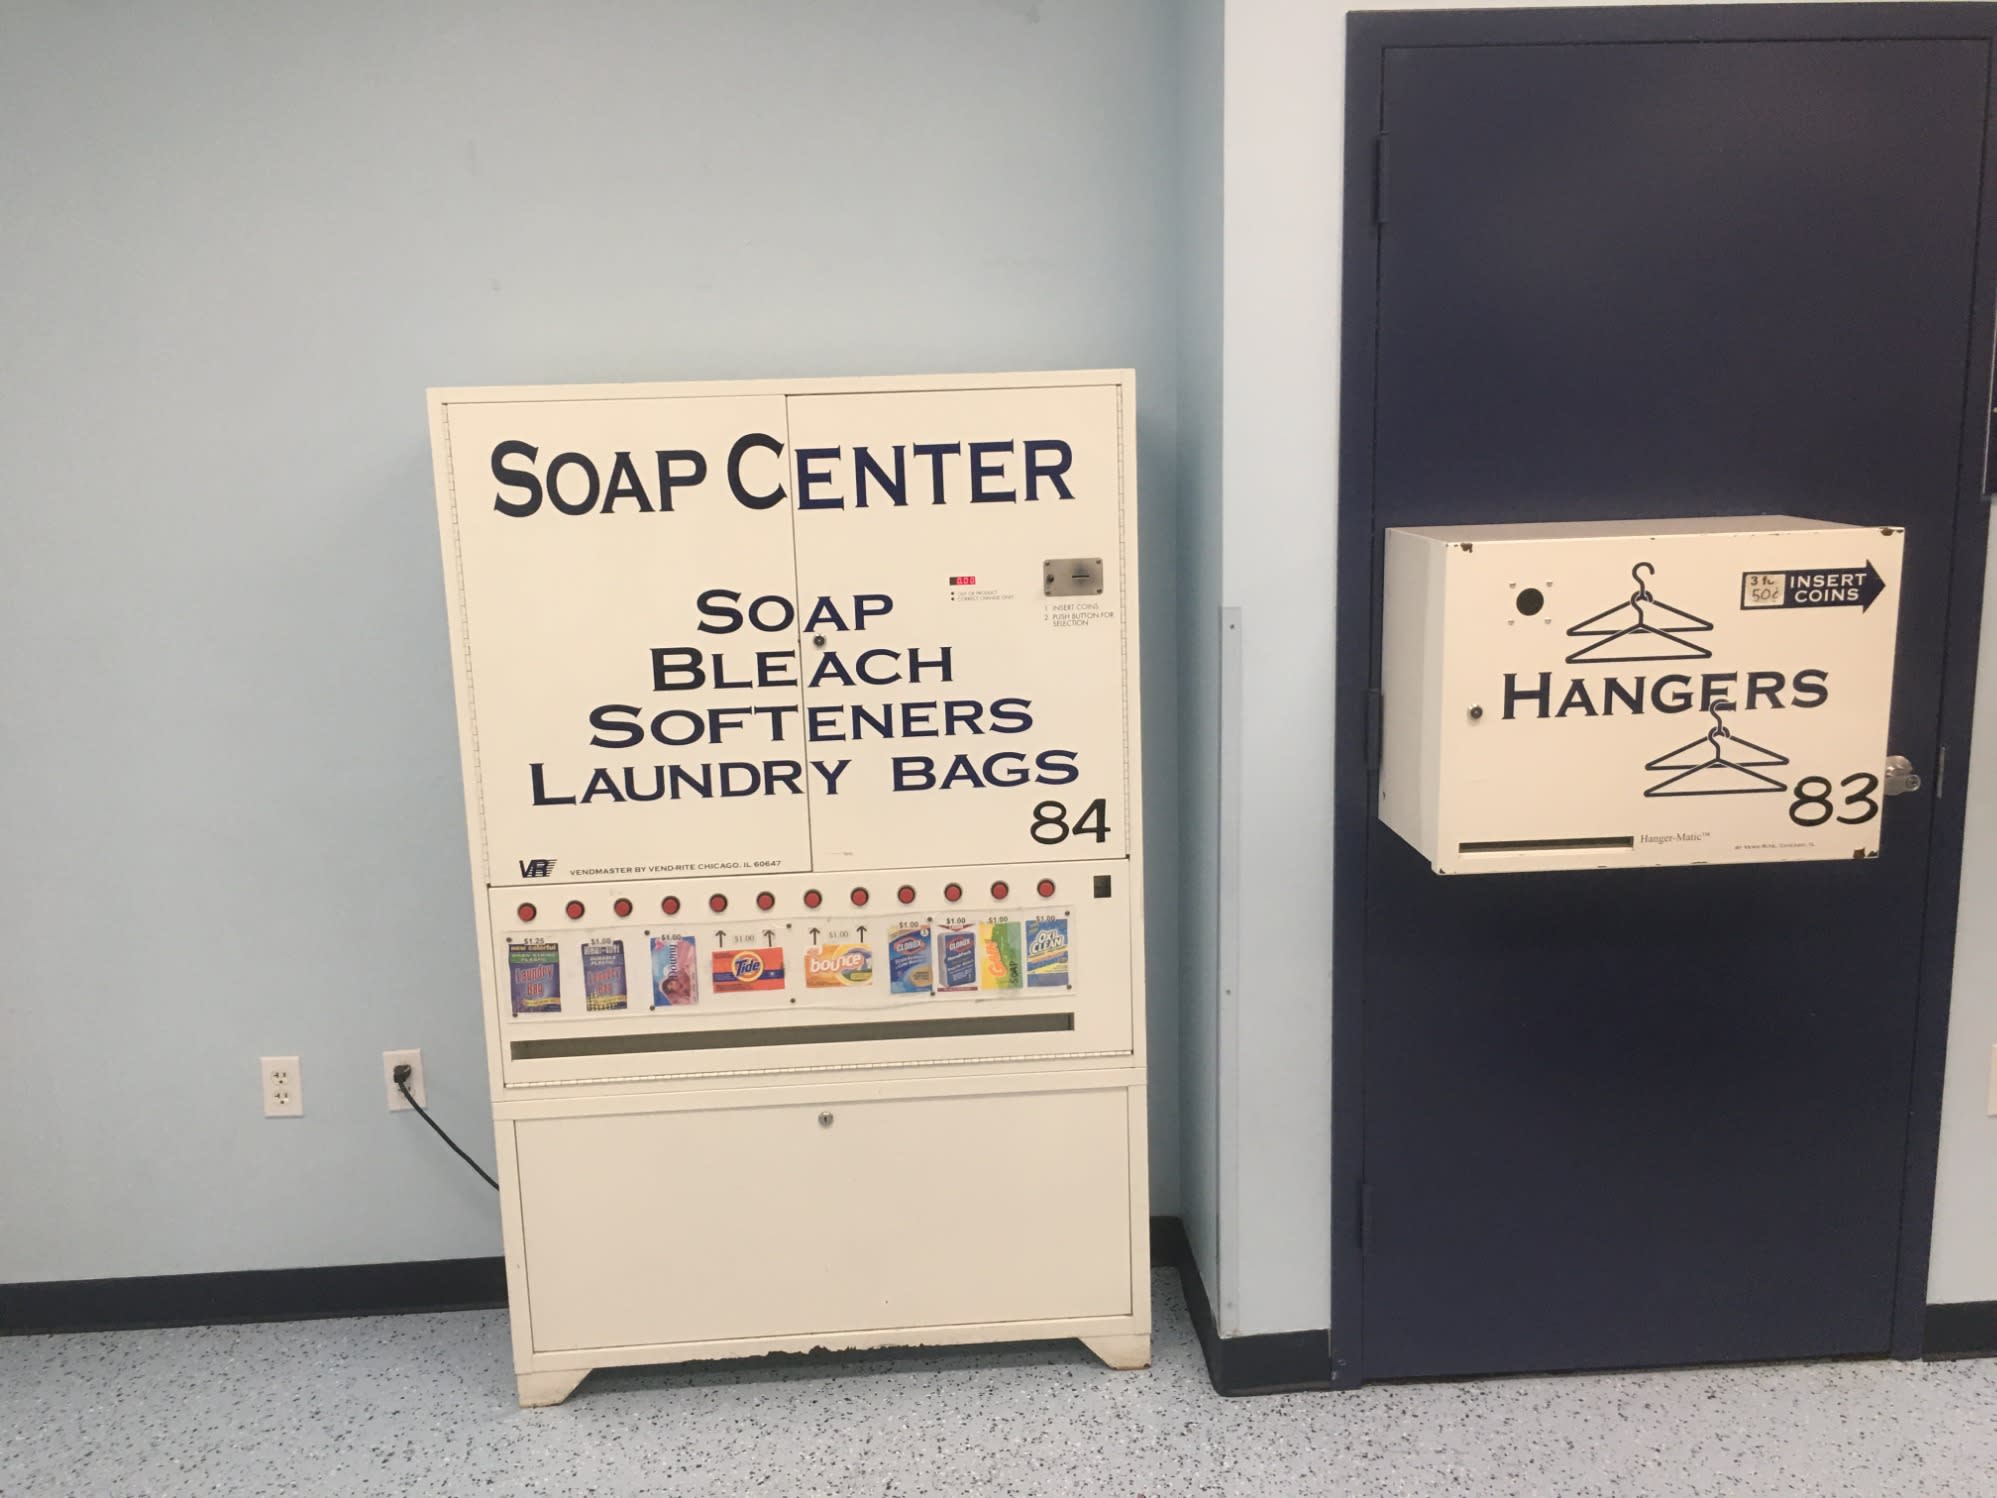 SOAP & HANGER VENDING MACHINES Coin Laundry Express Flint (810)787-0610